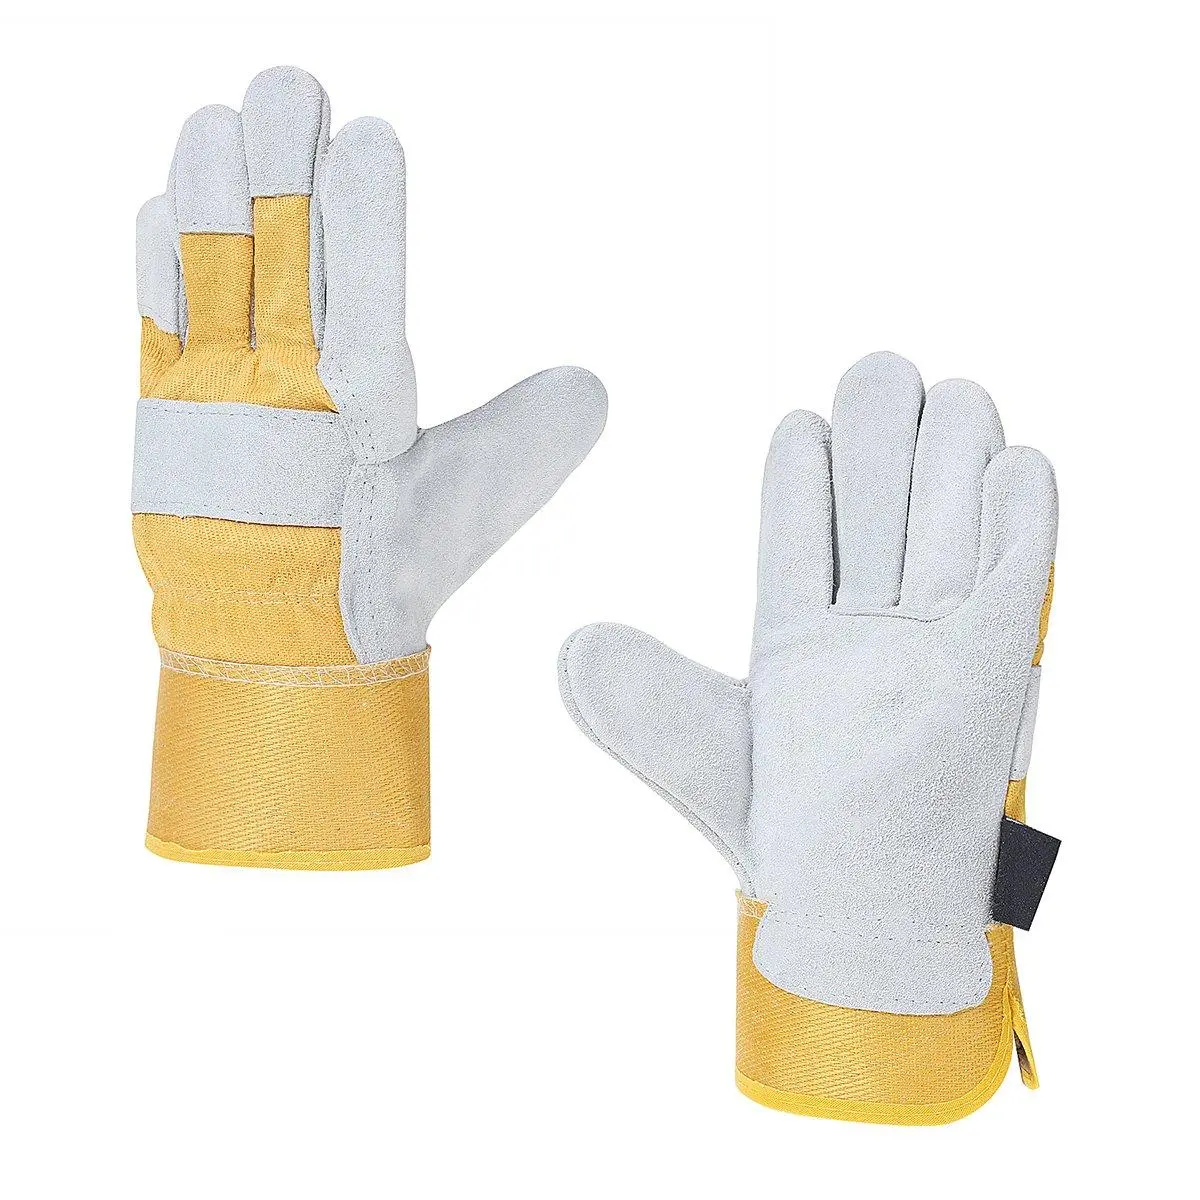 Large Heavy Duty work gloves Men split Leather Hand Protection work gloves 1 pair